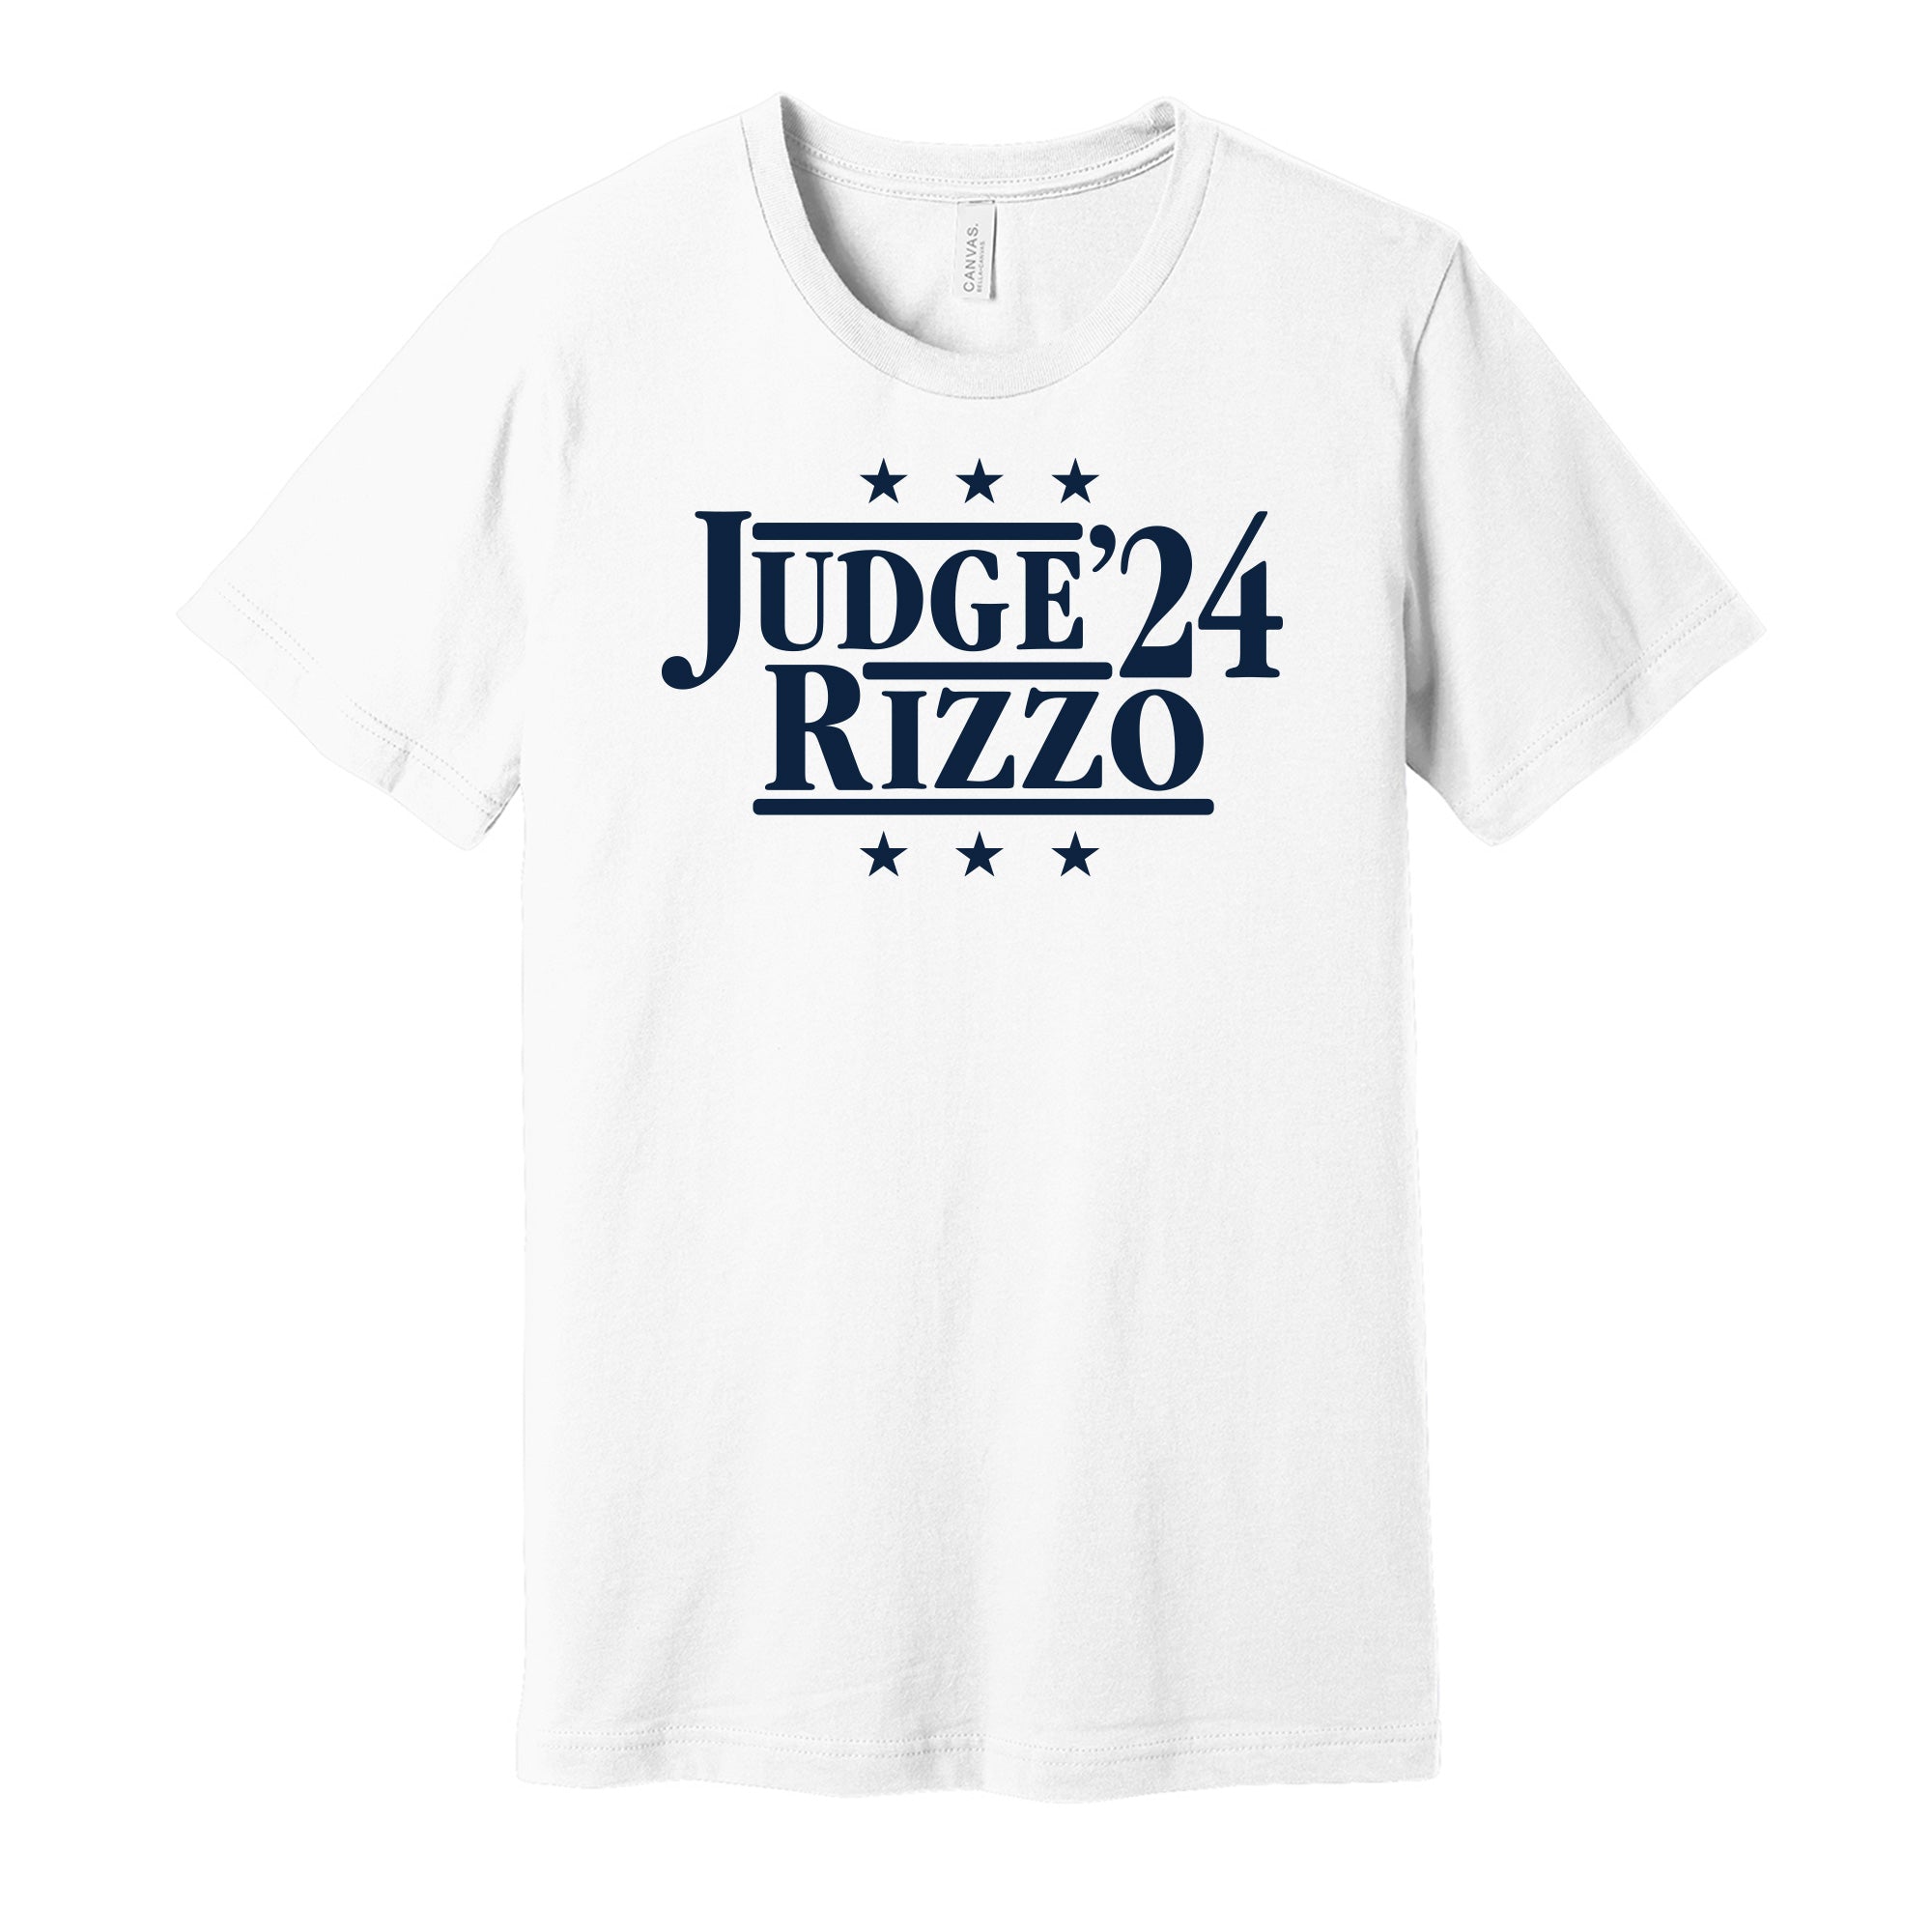 Judge & Rizzo '24 - New York Baseball Political Campaign Parody T-Shirt - Hyper Than Hype Shirts M / White Shirt